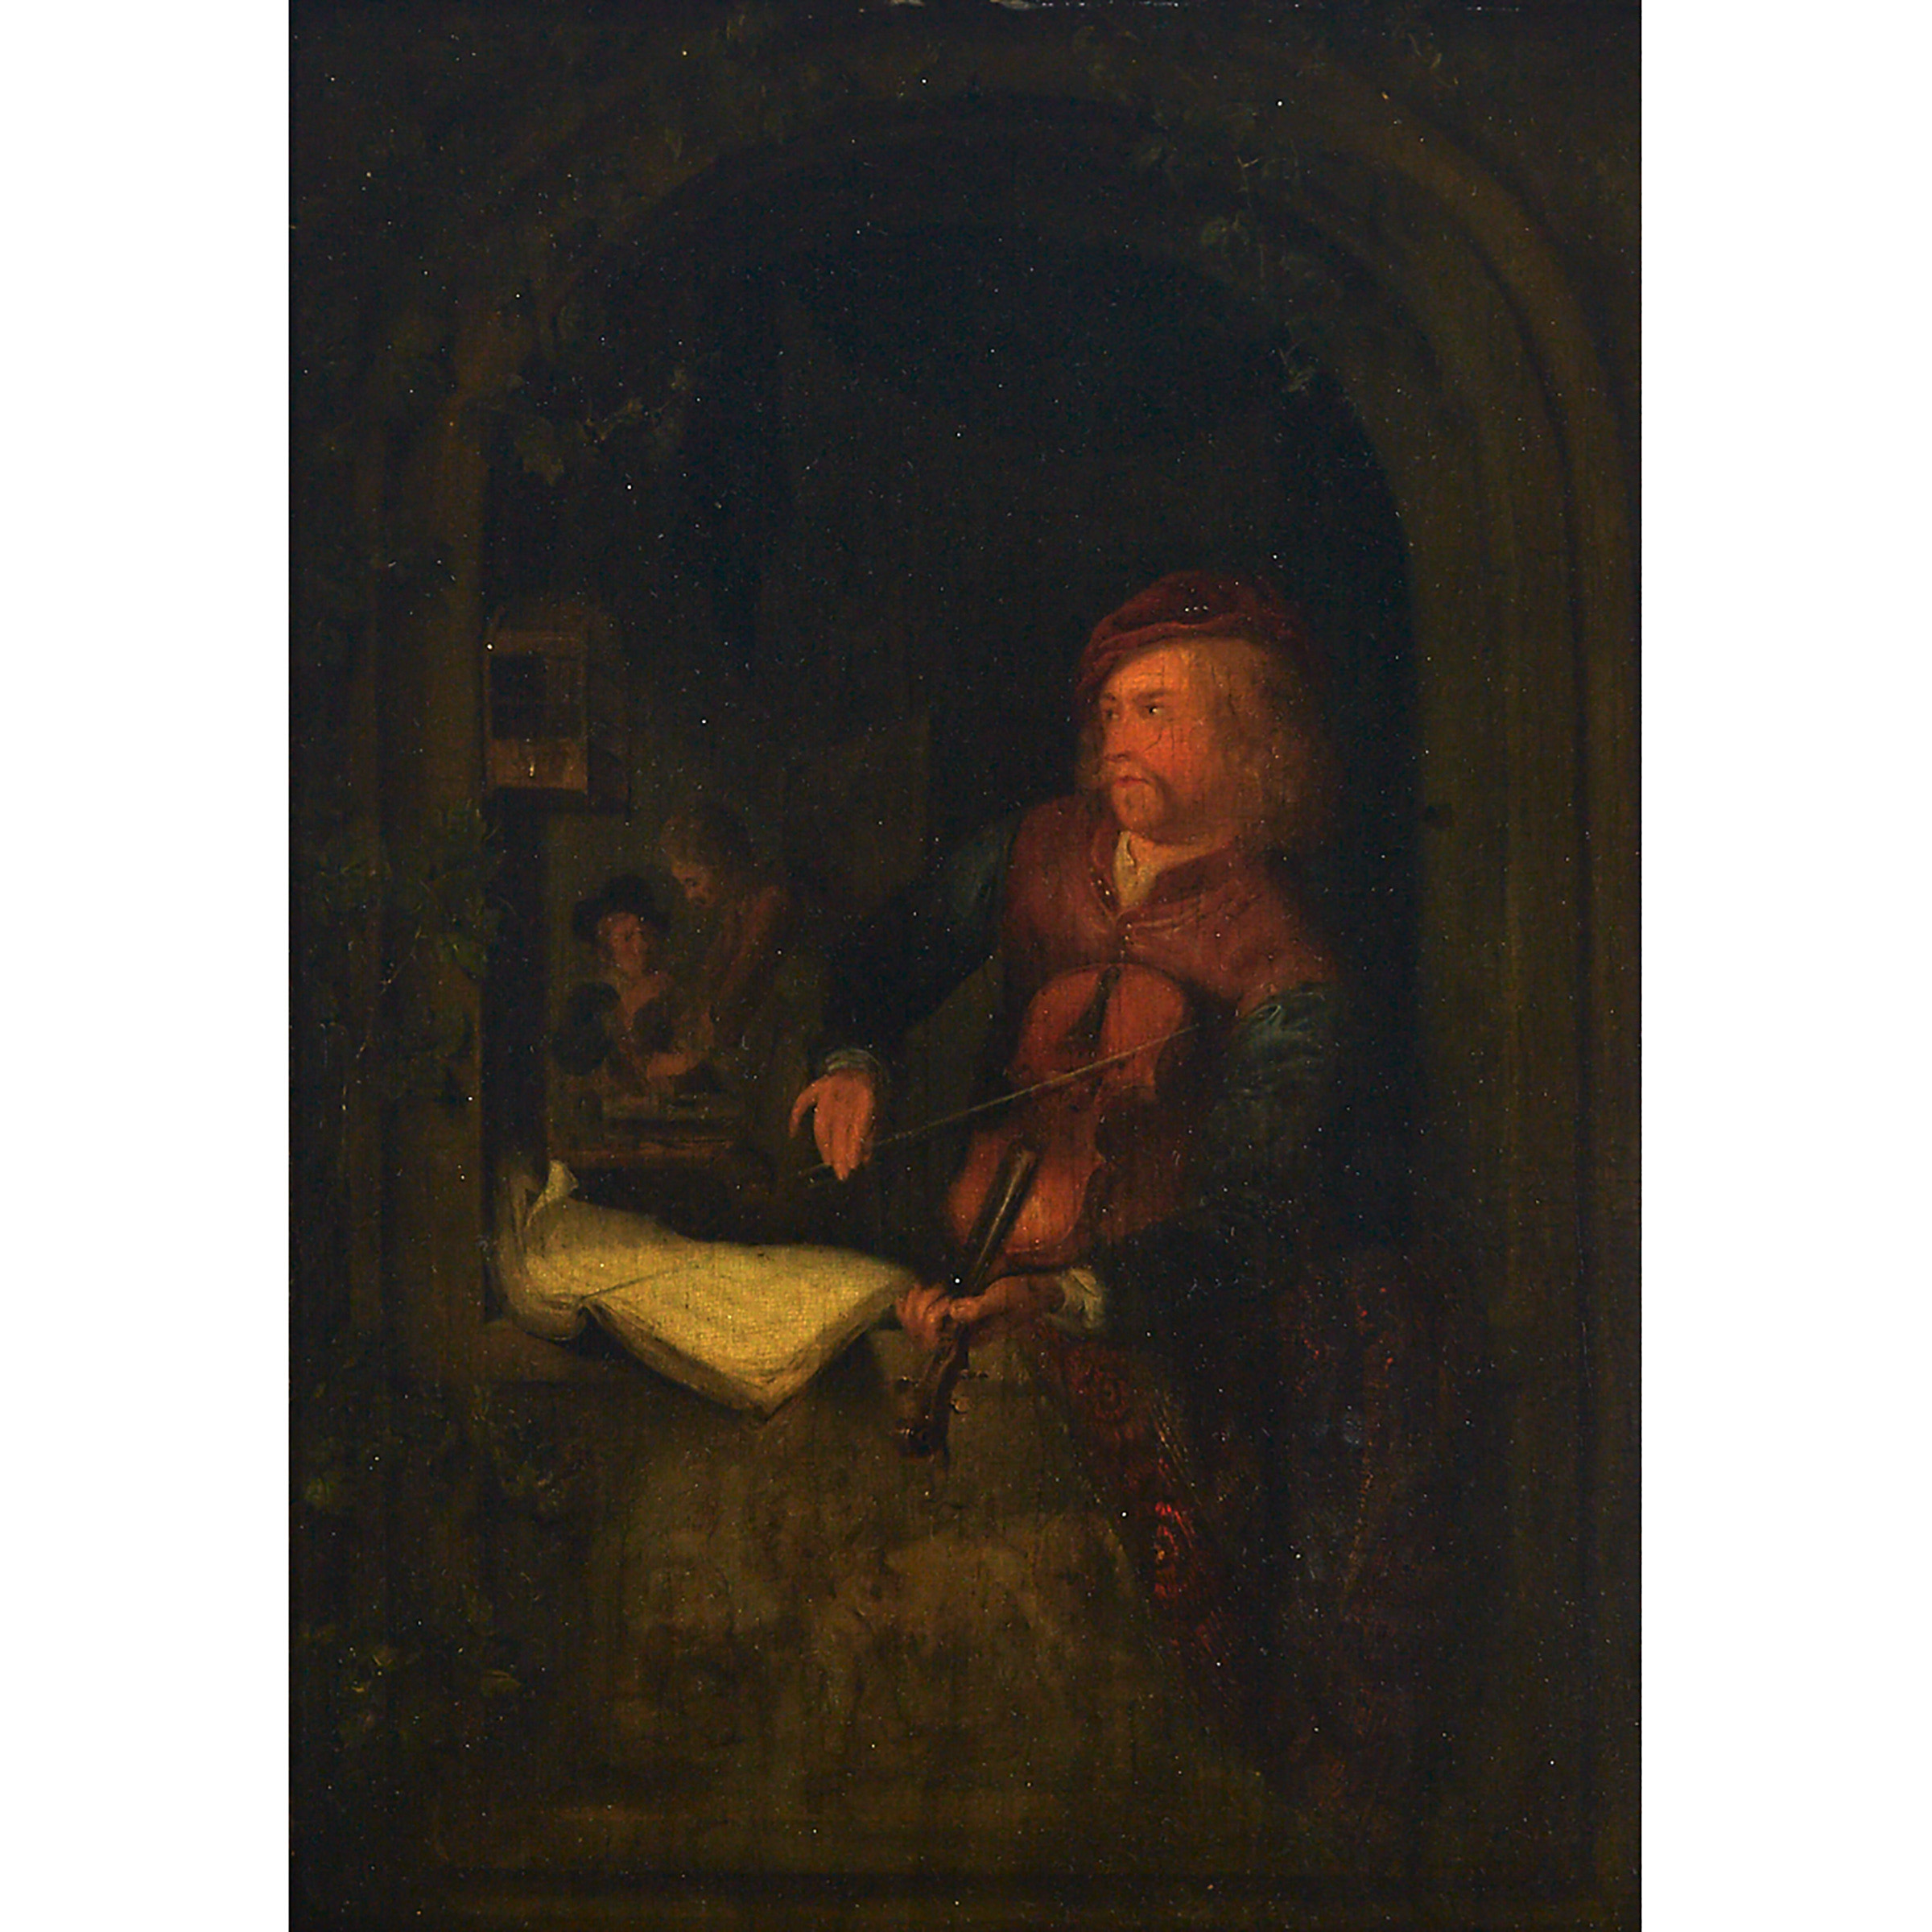 After Gerrit Dou (1613-1675)